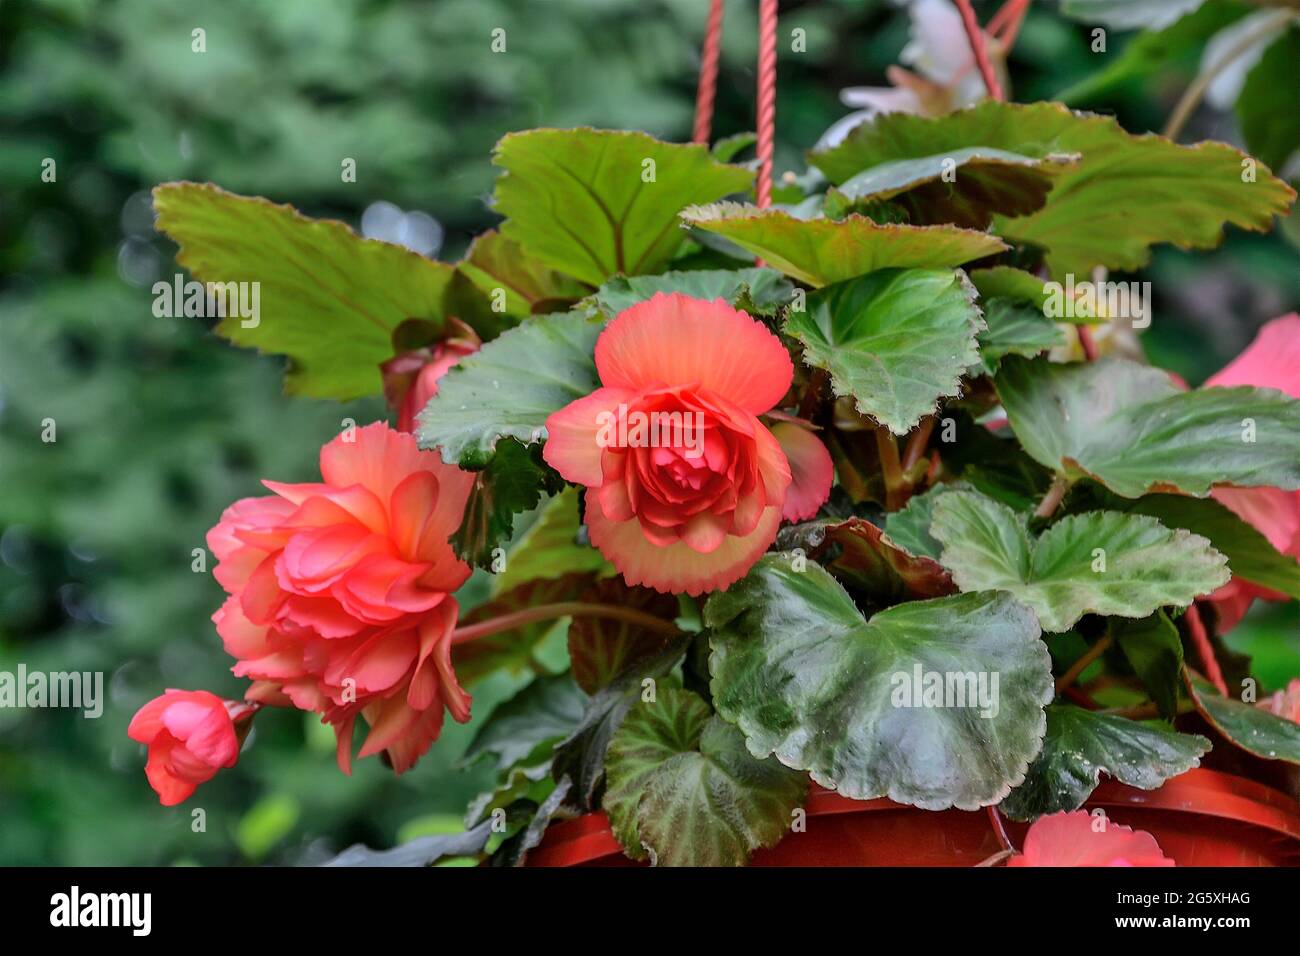 Cultivo en maceta fotografías e imágenes de alta resolución - Alamy